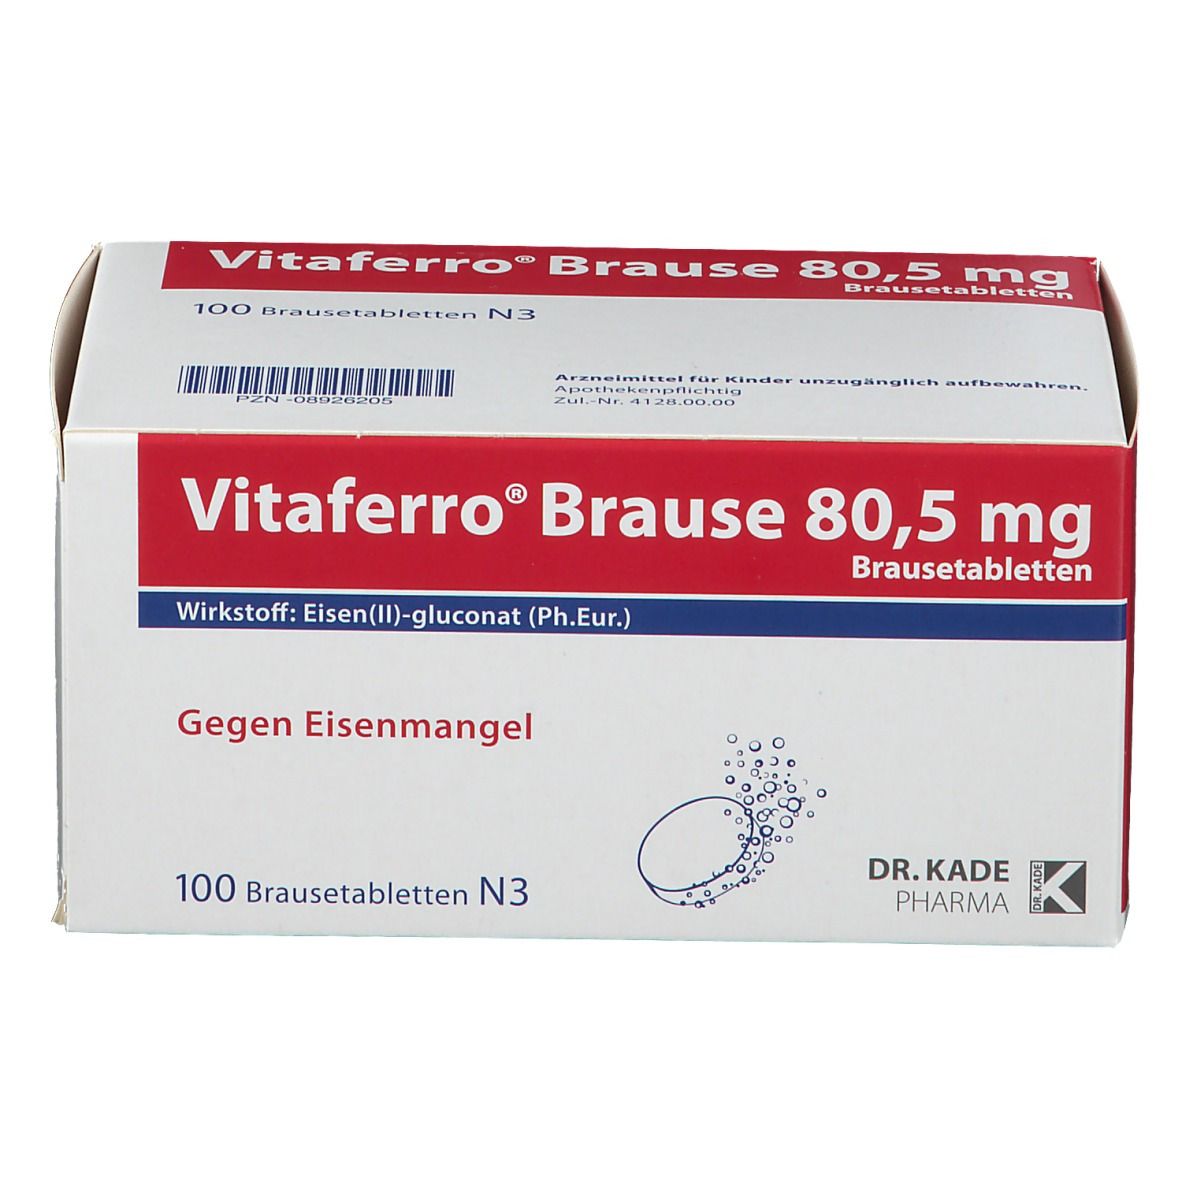 Vitaferro® Brause, 80,5 mg Brausetabletten